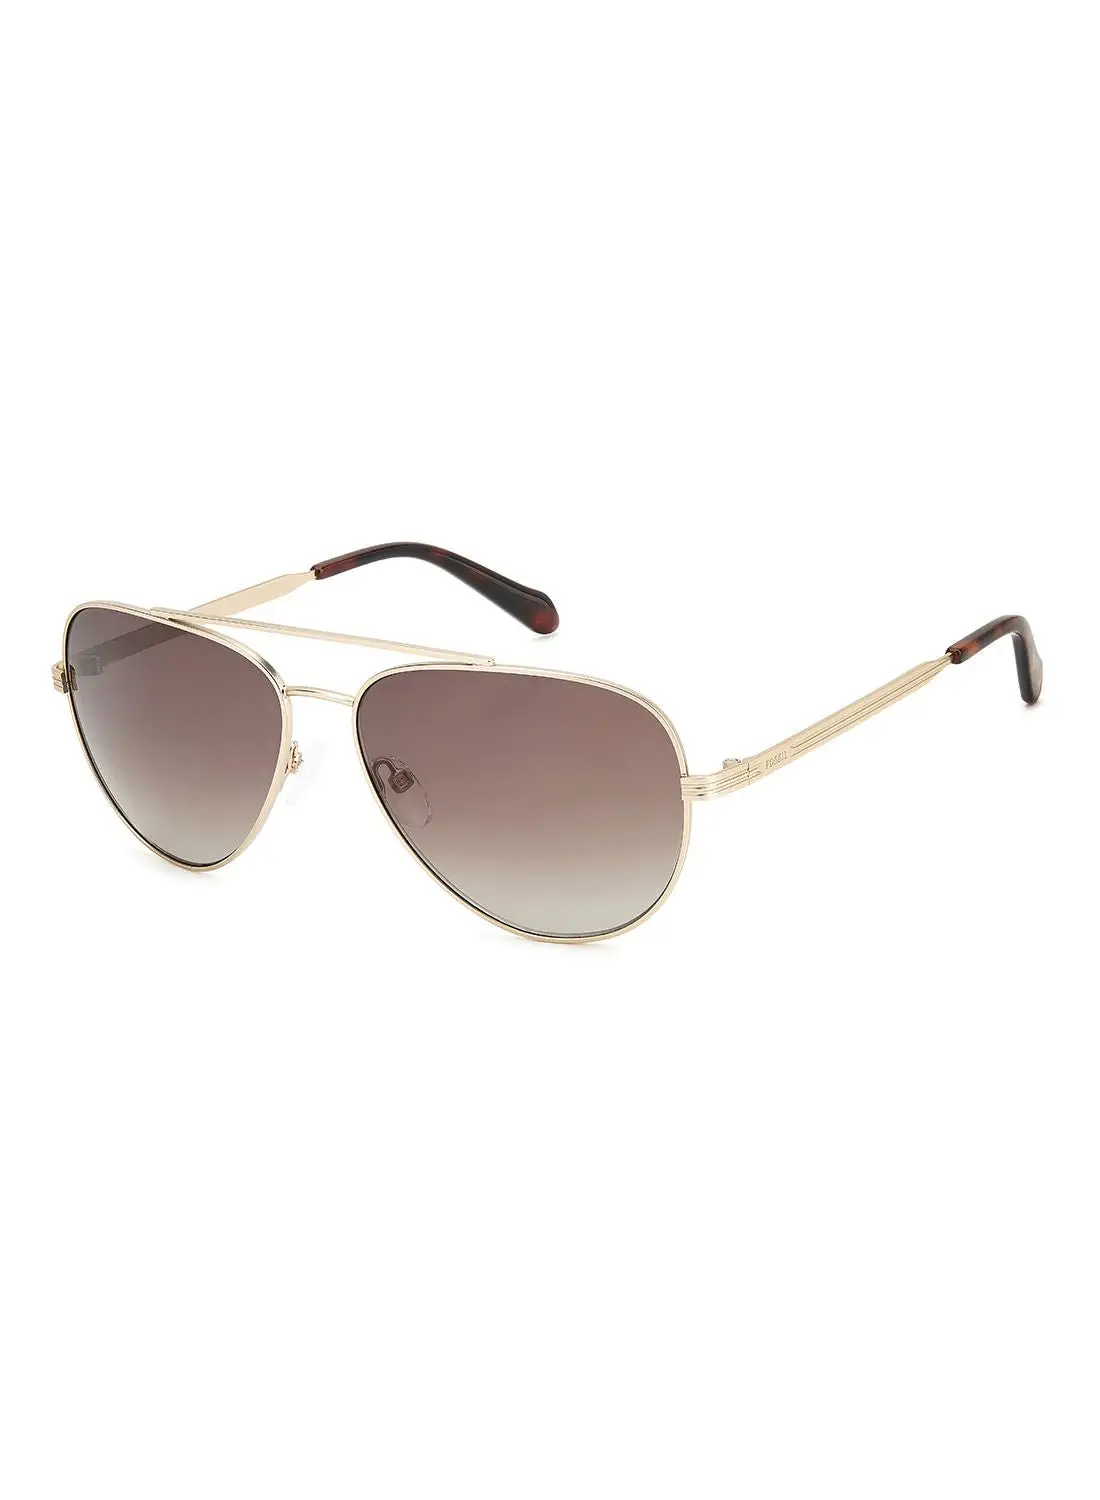 FOSSIL Men's UV Protection Pilot Sunglasses - Fos 3144/G/S Mt Gd 60 - Lens Size: 60 Mm